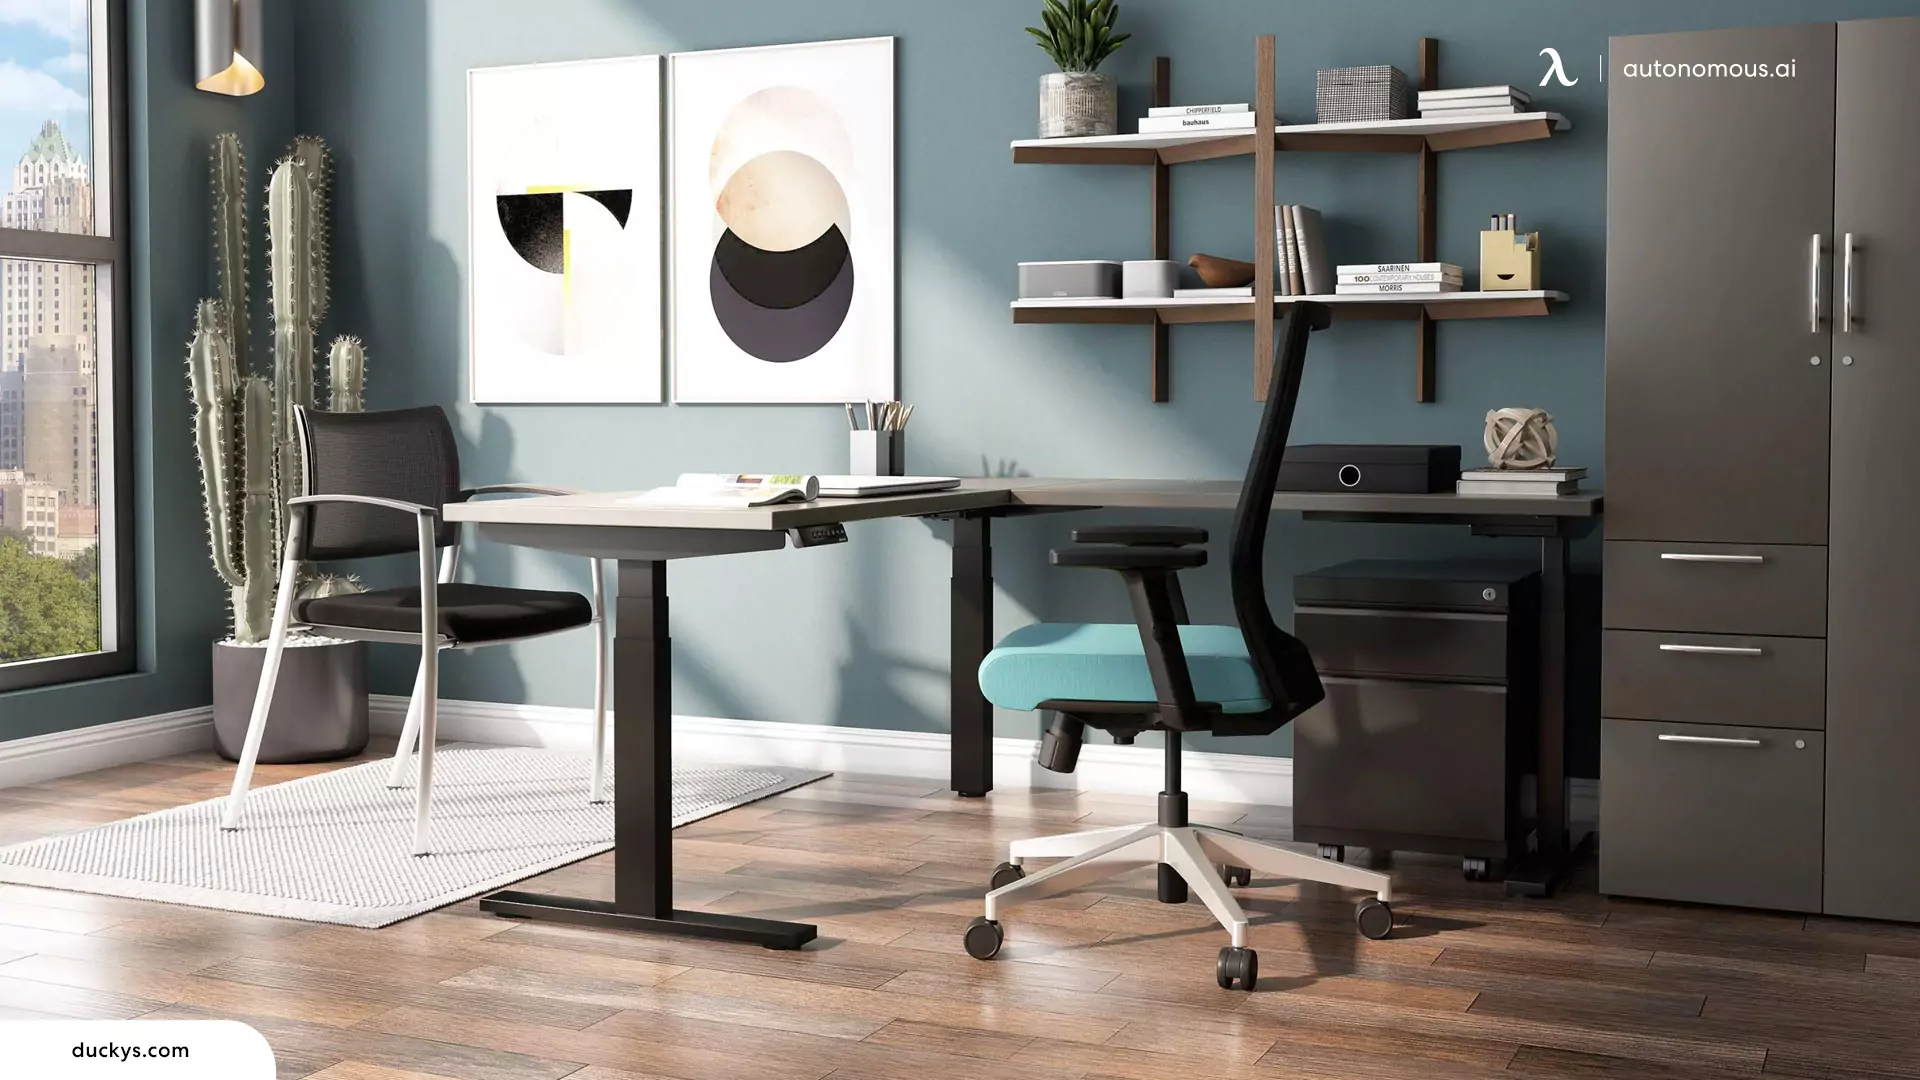 McKinney Office Furniture Store: Where Ergonomic Meets Affordability